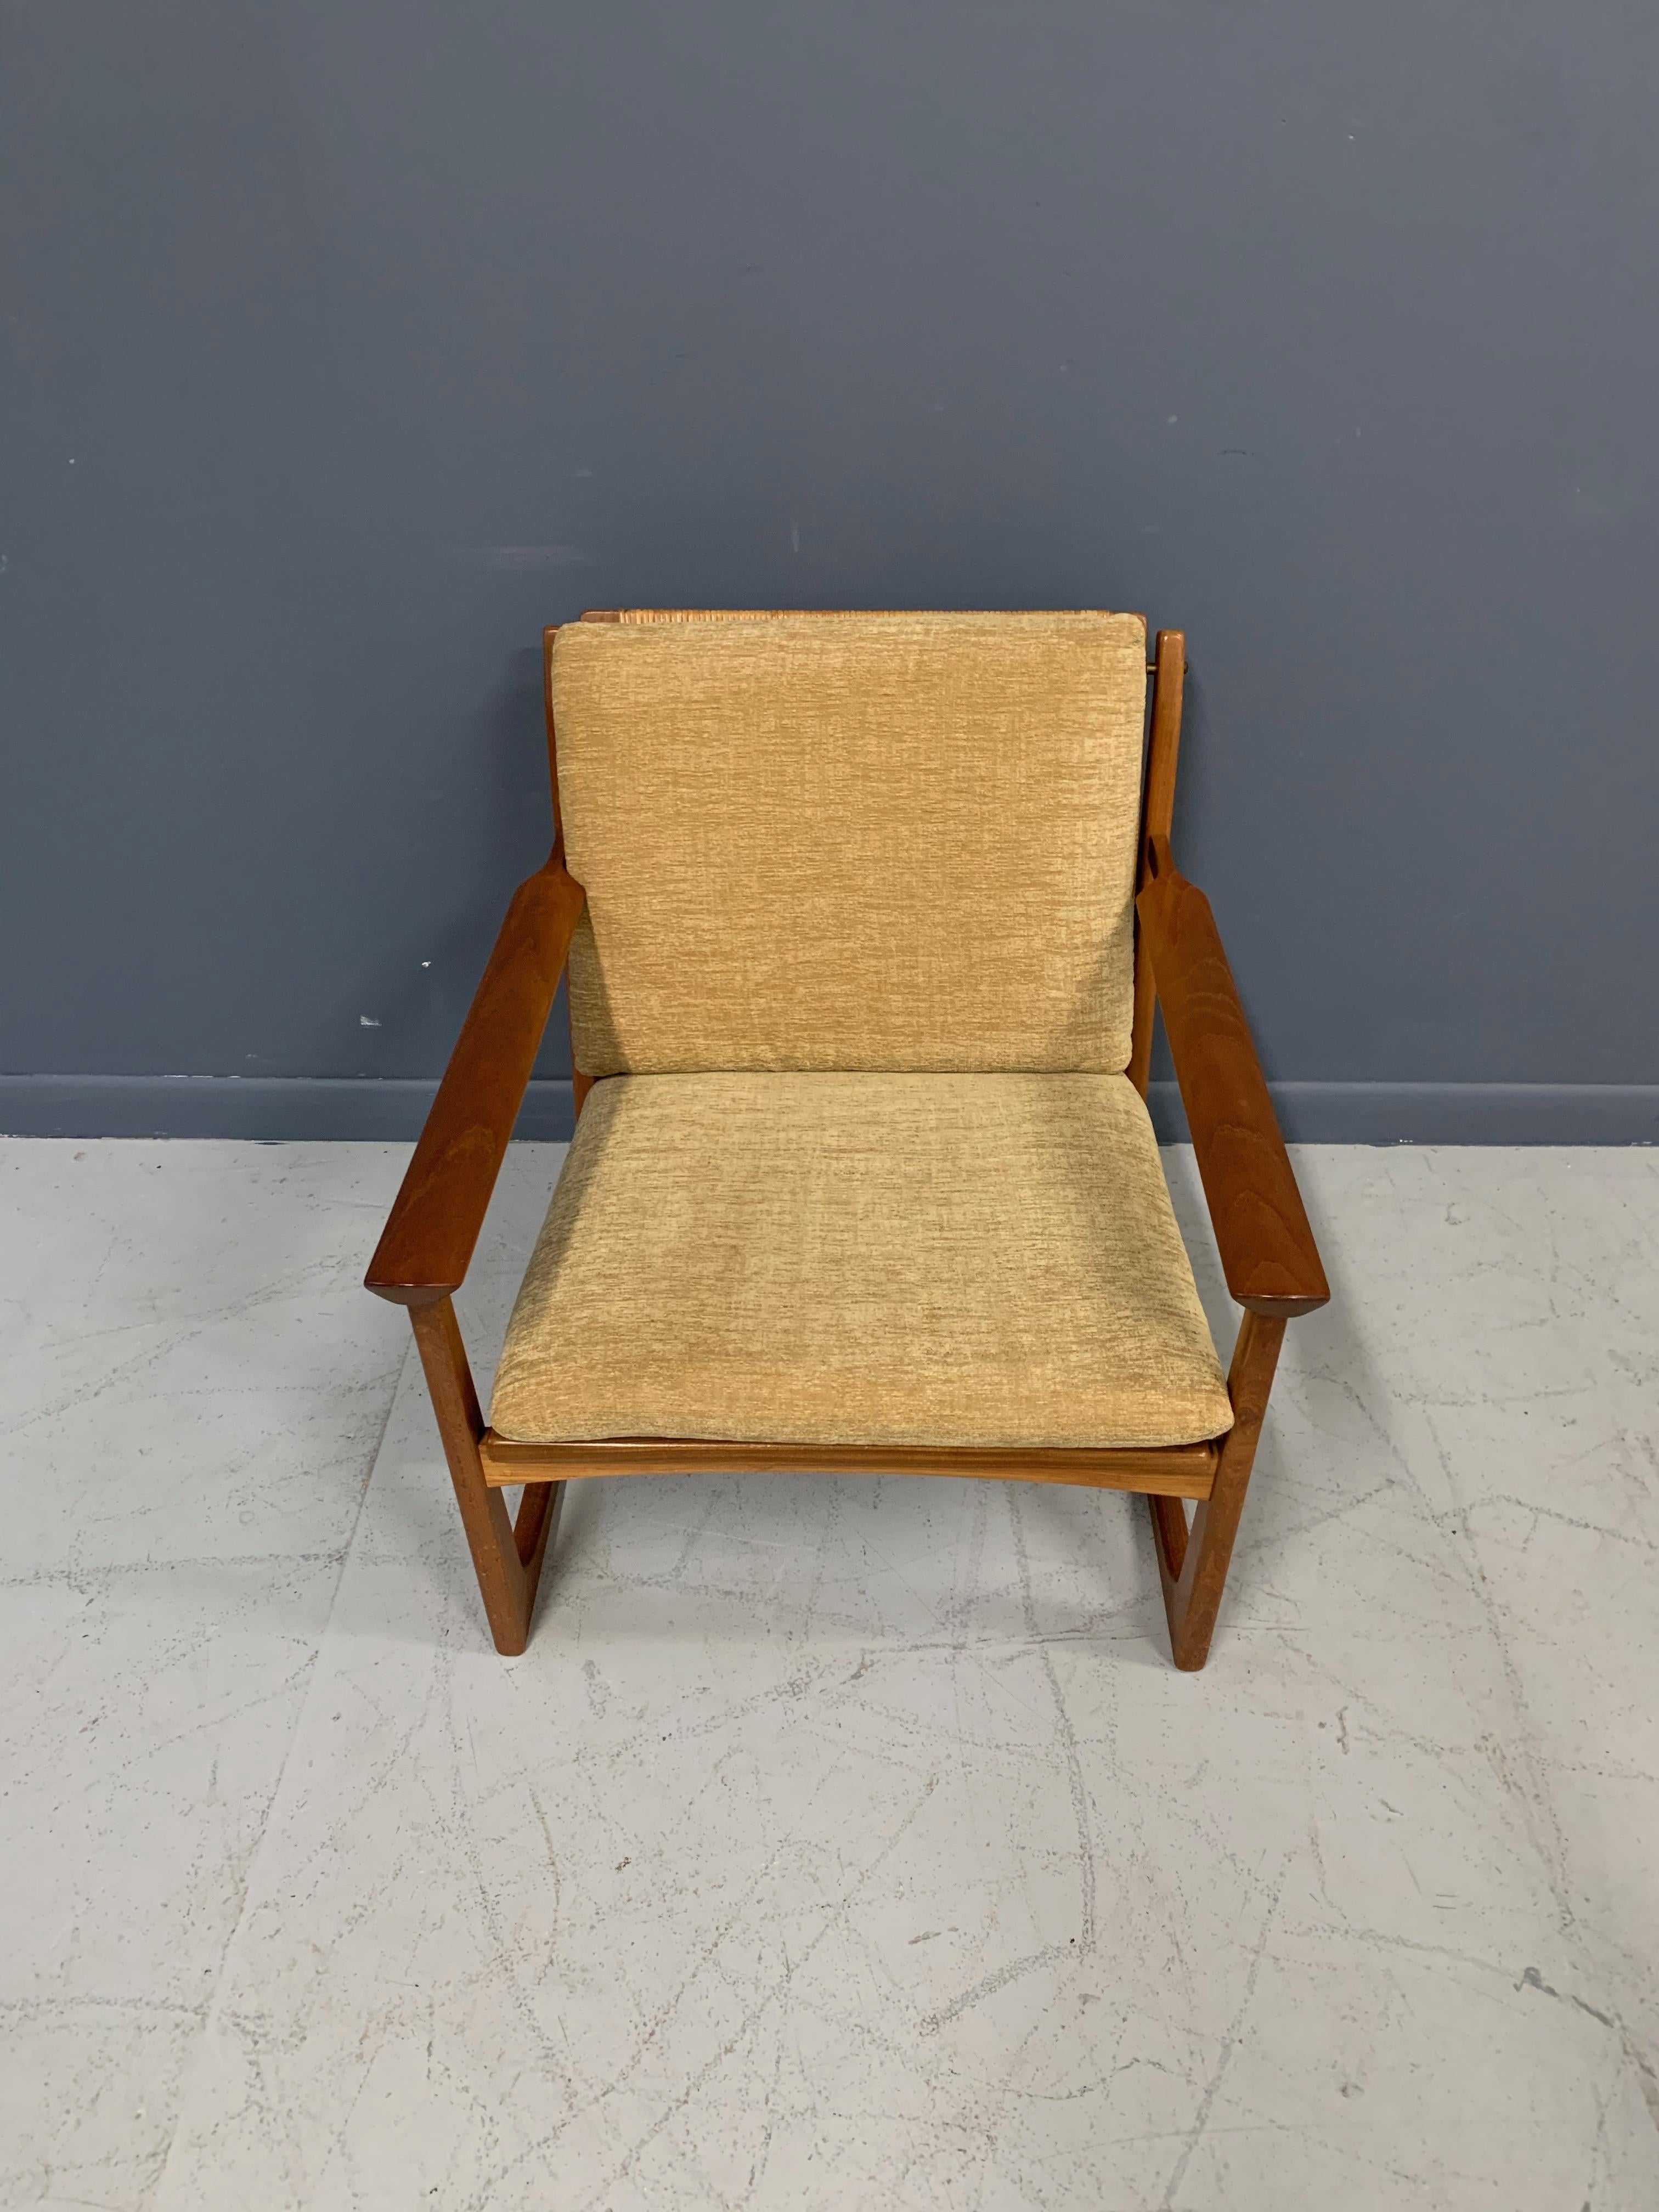 Mid-Century Modern Hans Olsen Teak and Cane Lounge Chair for Juul Kristensen Midcentury